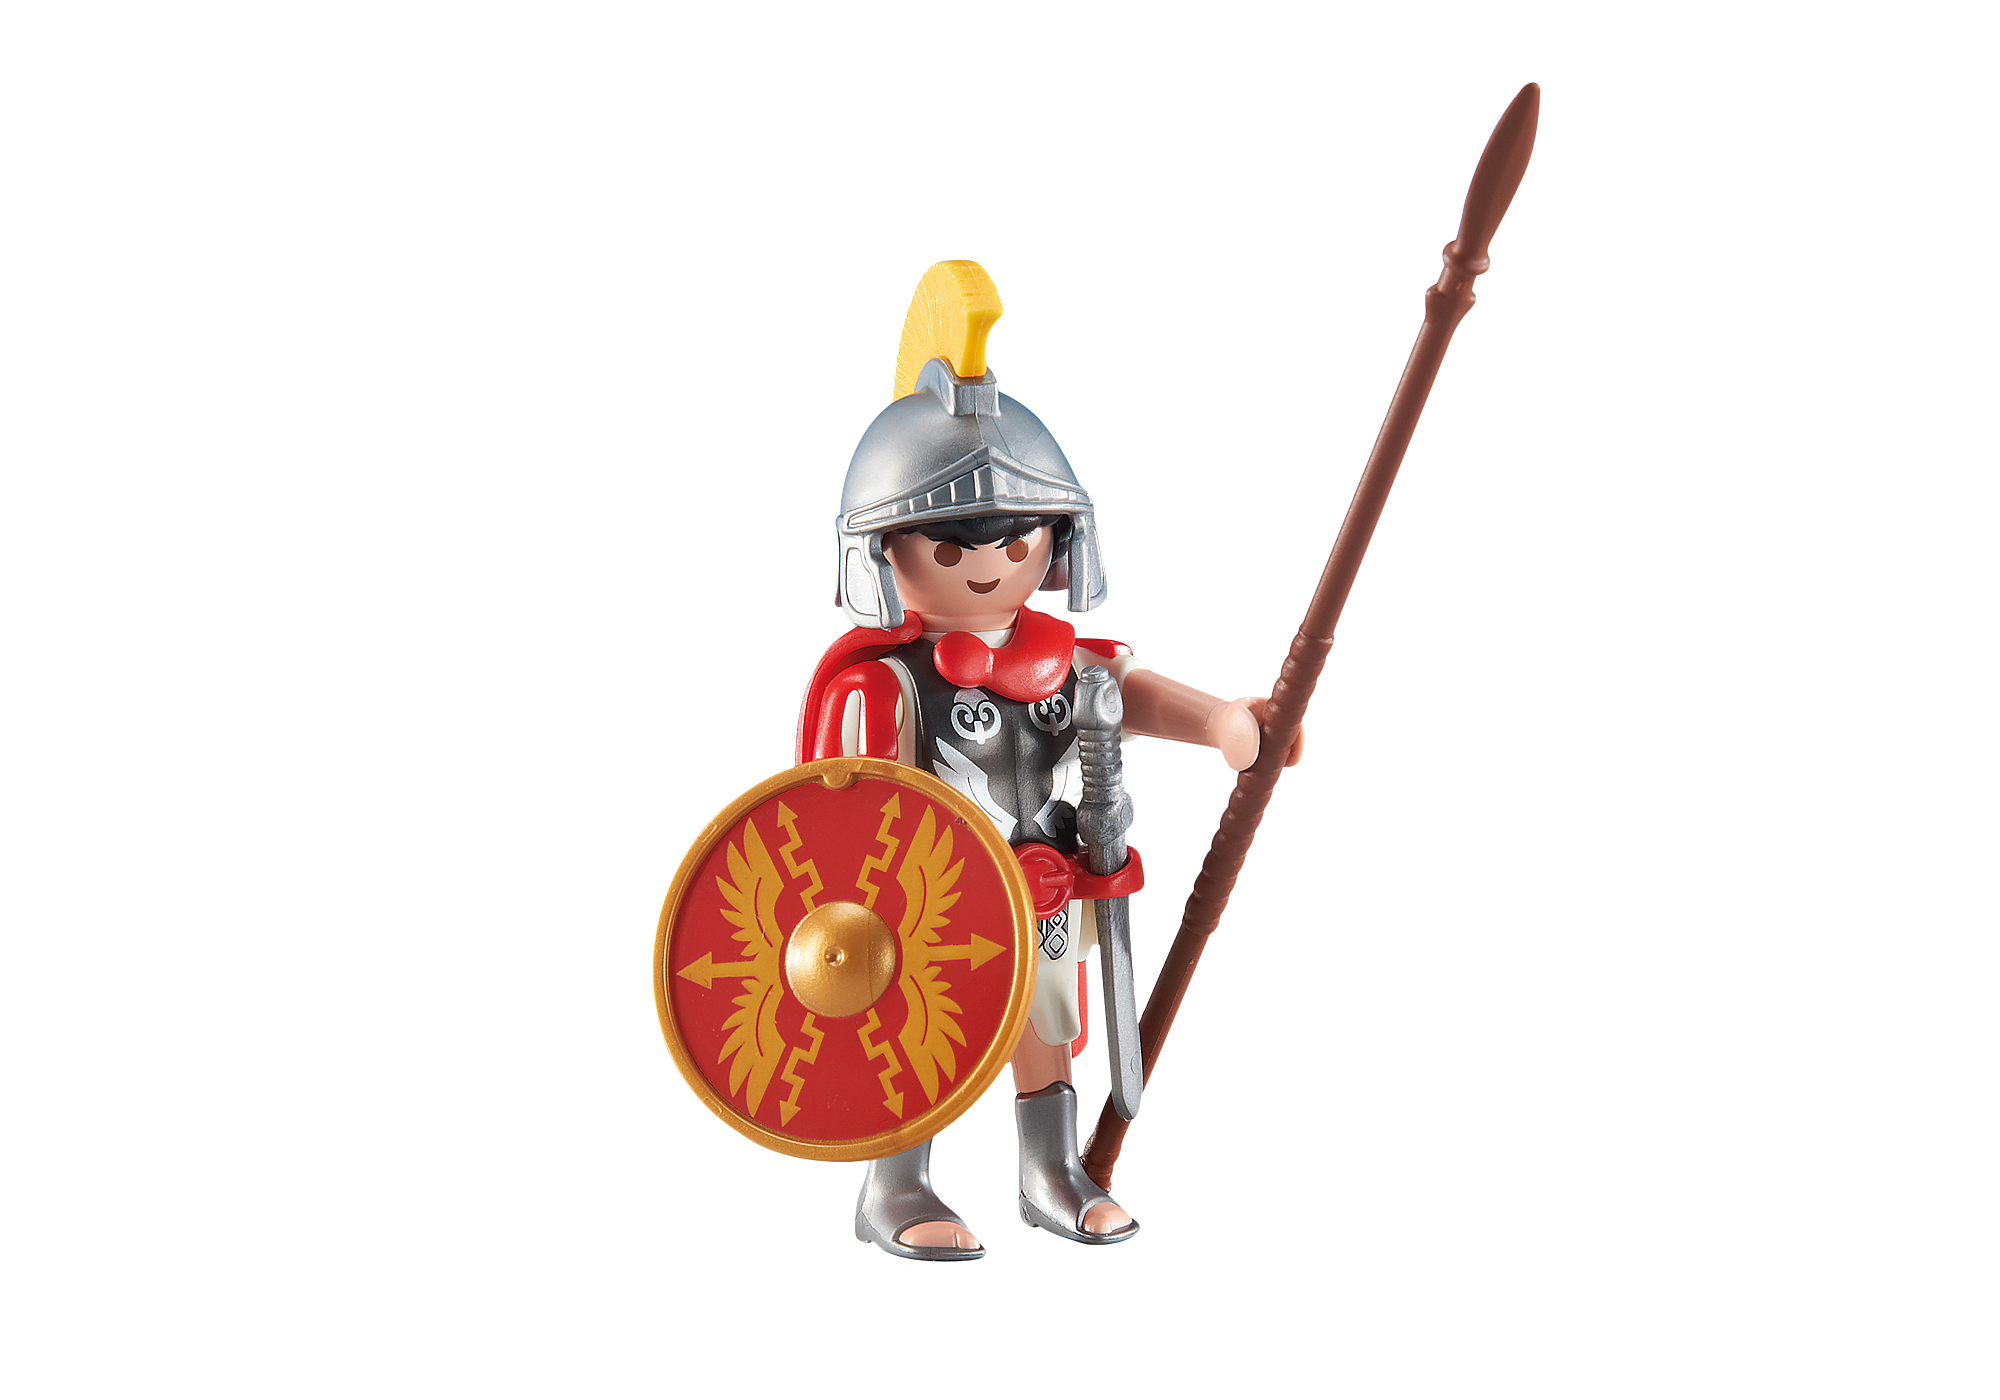 Tribun romain - 6491